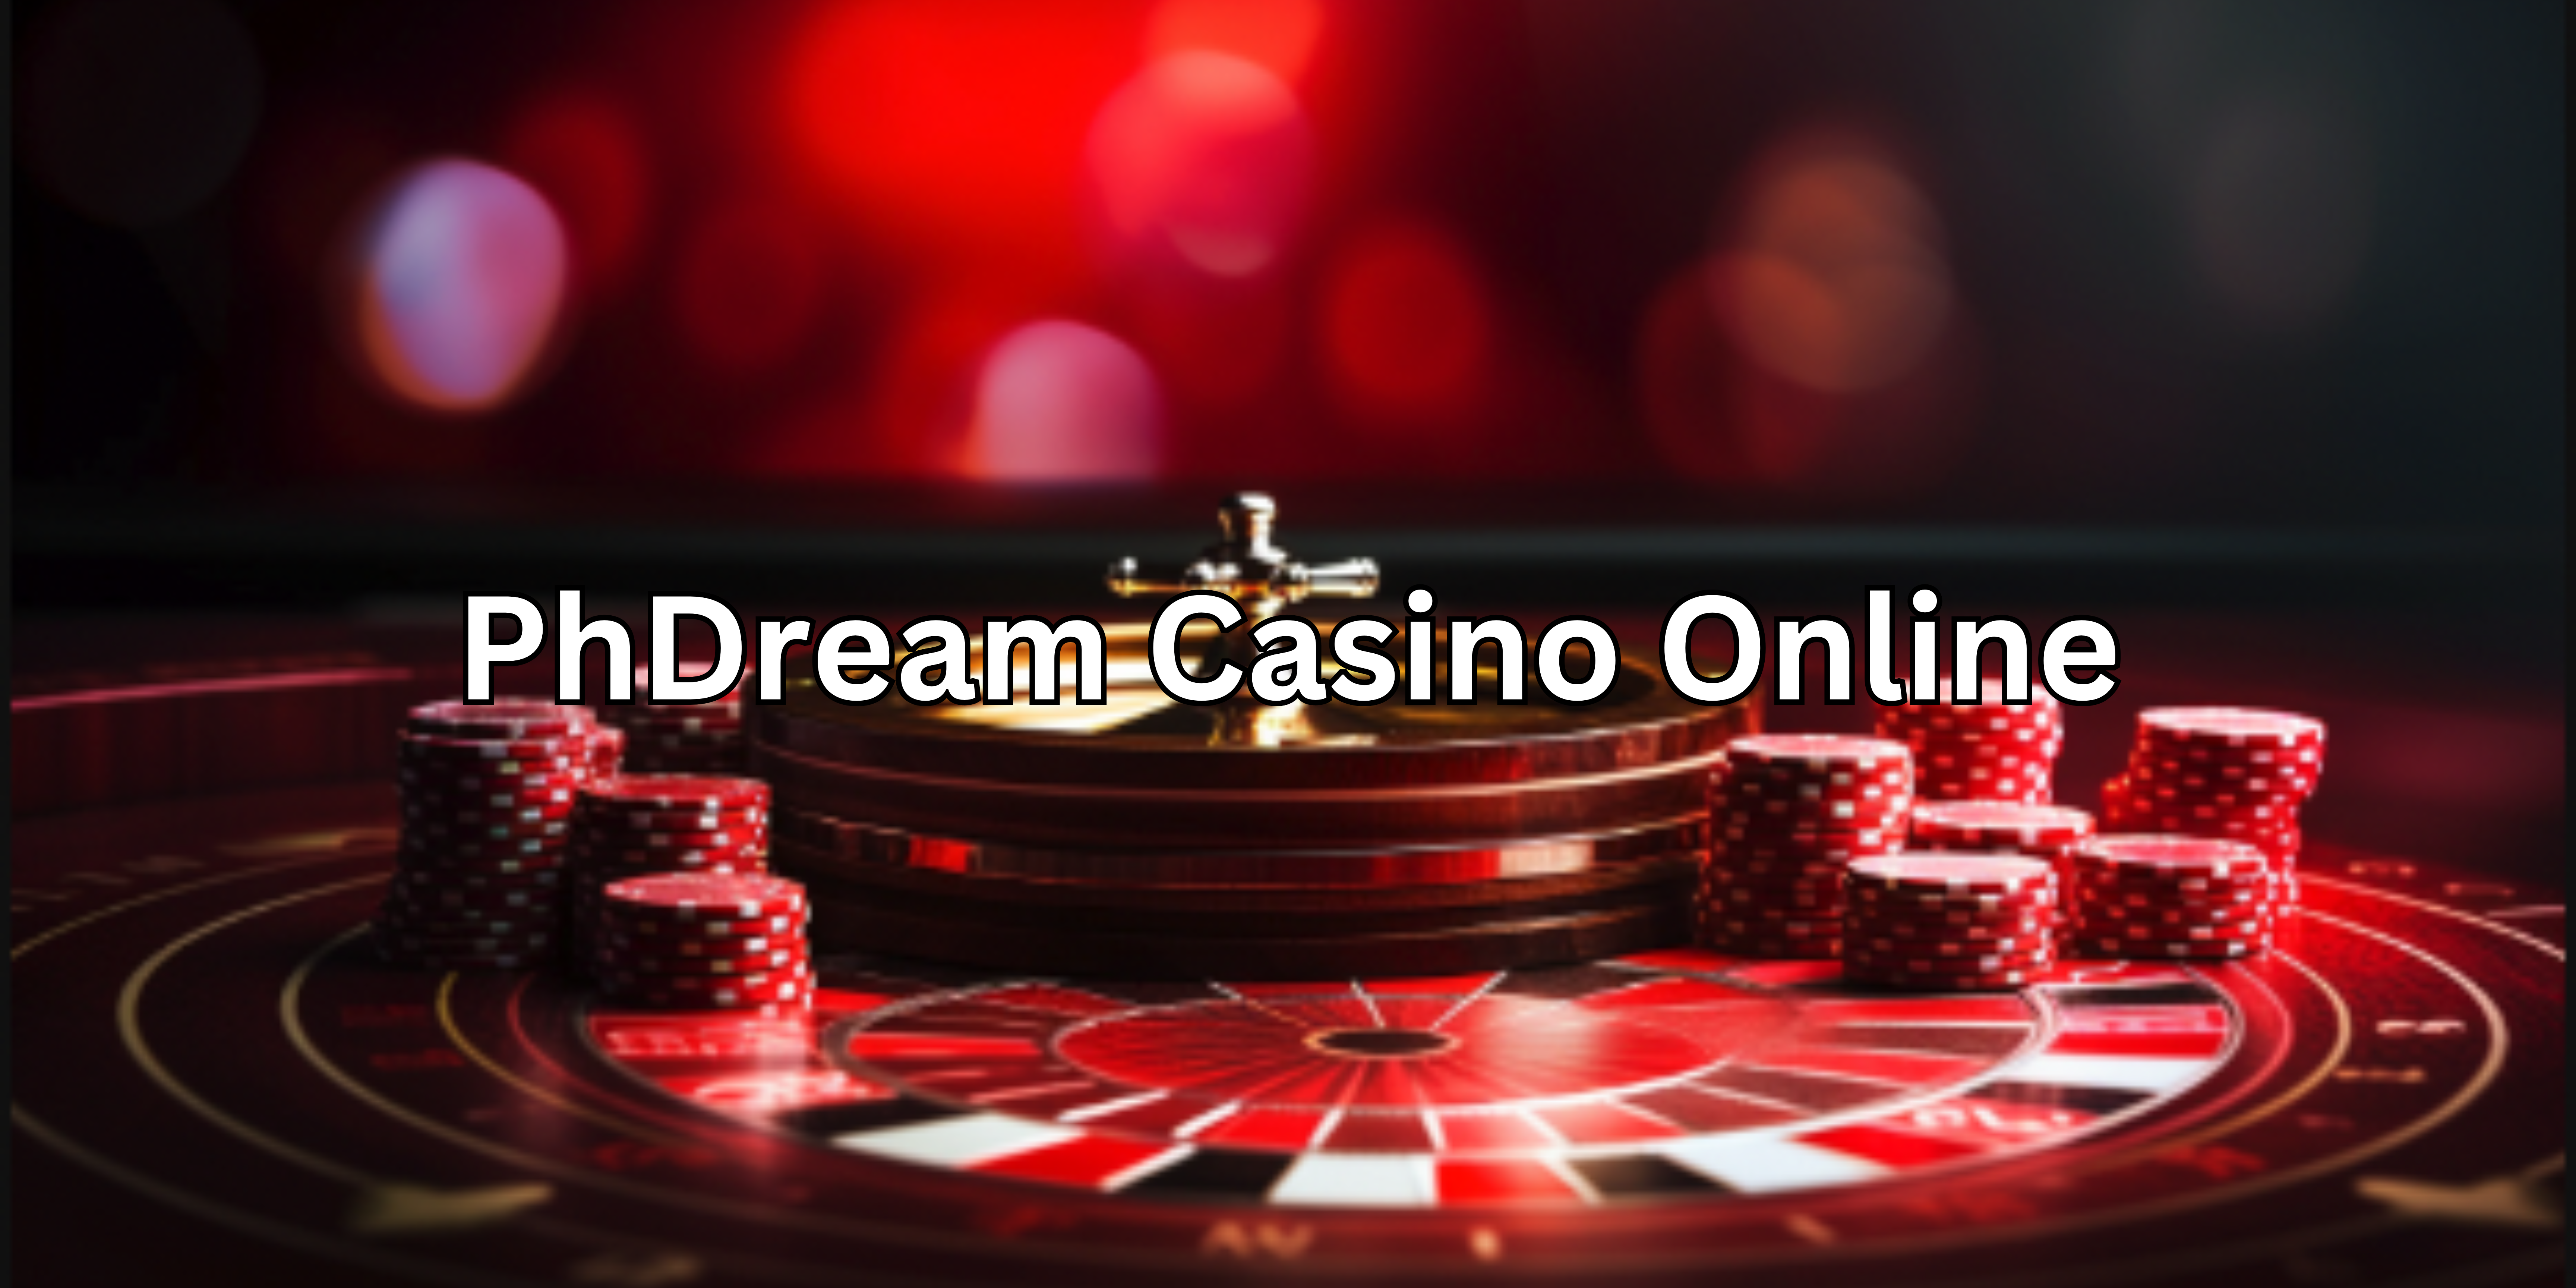 PhDream Casino Online